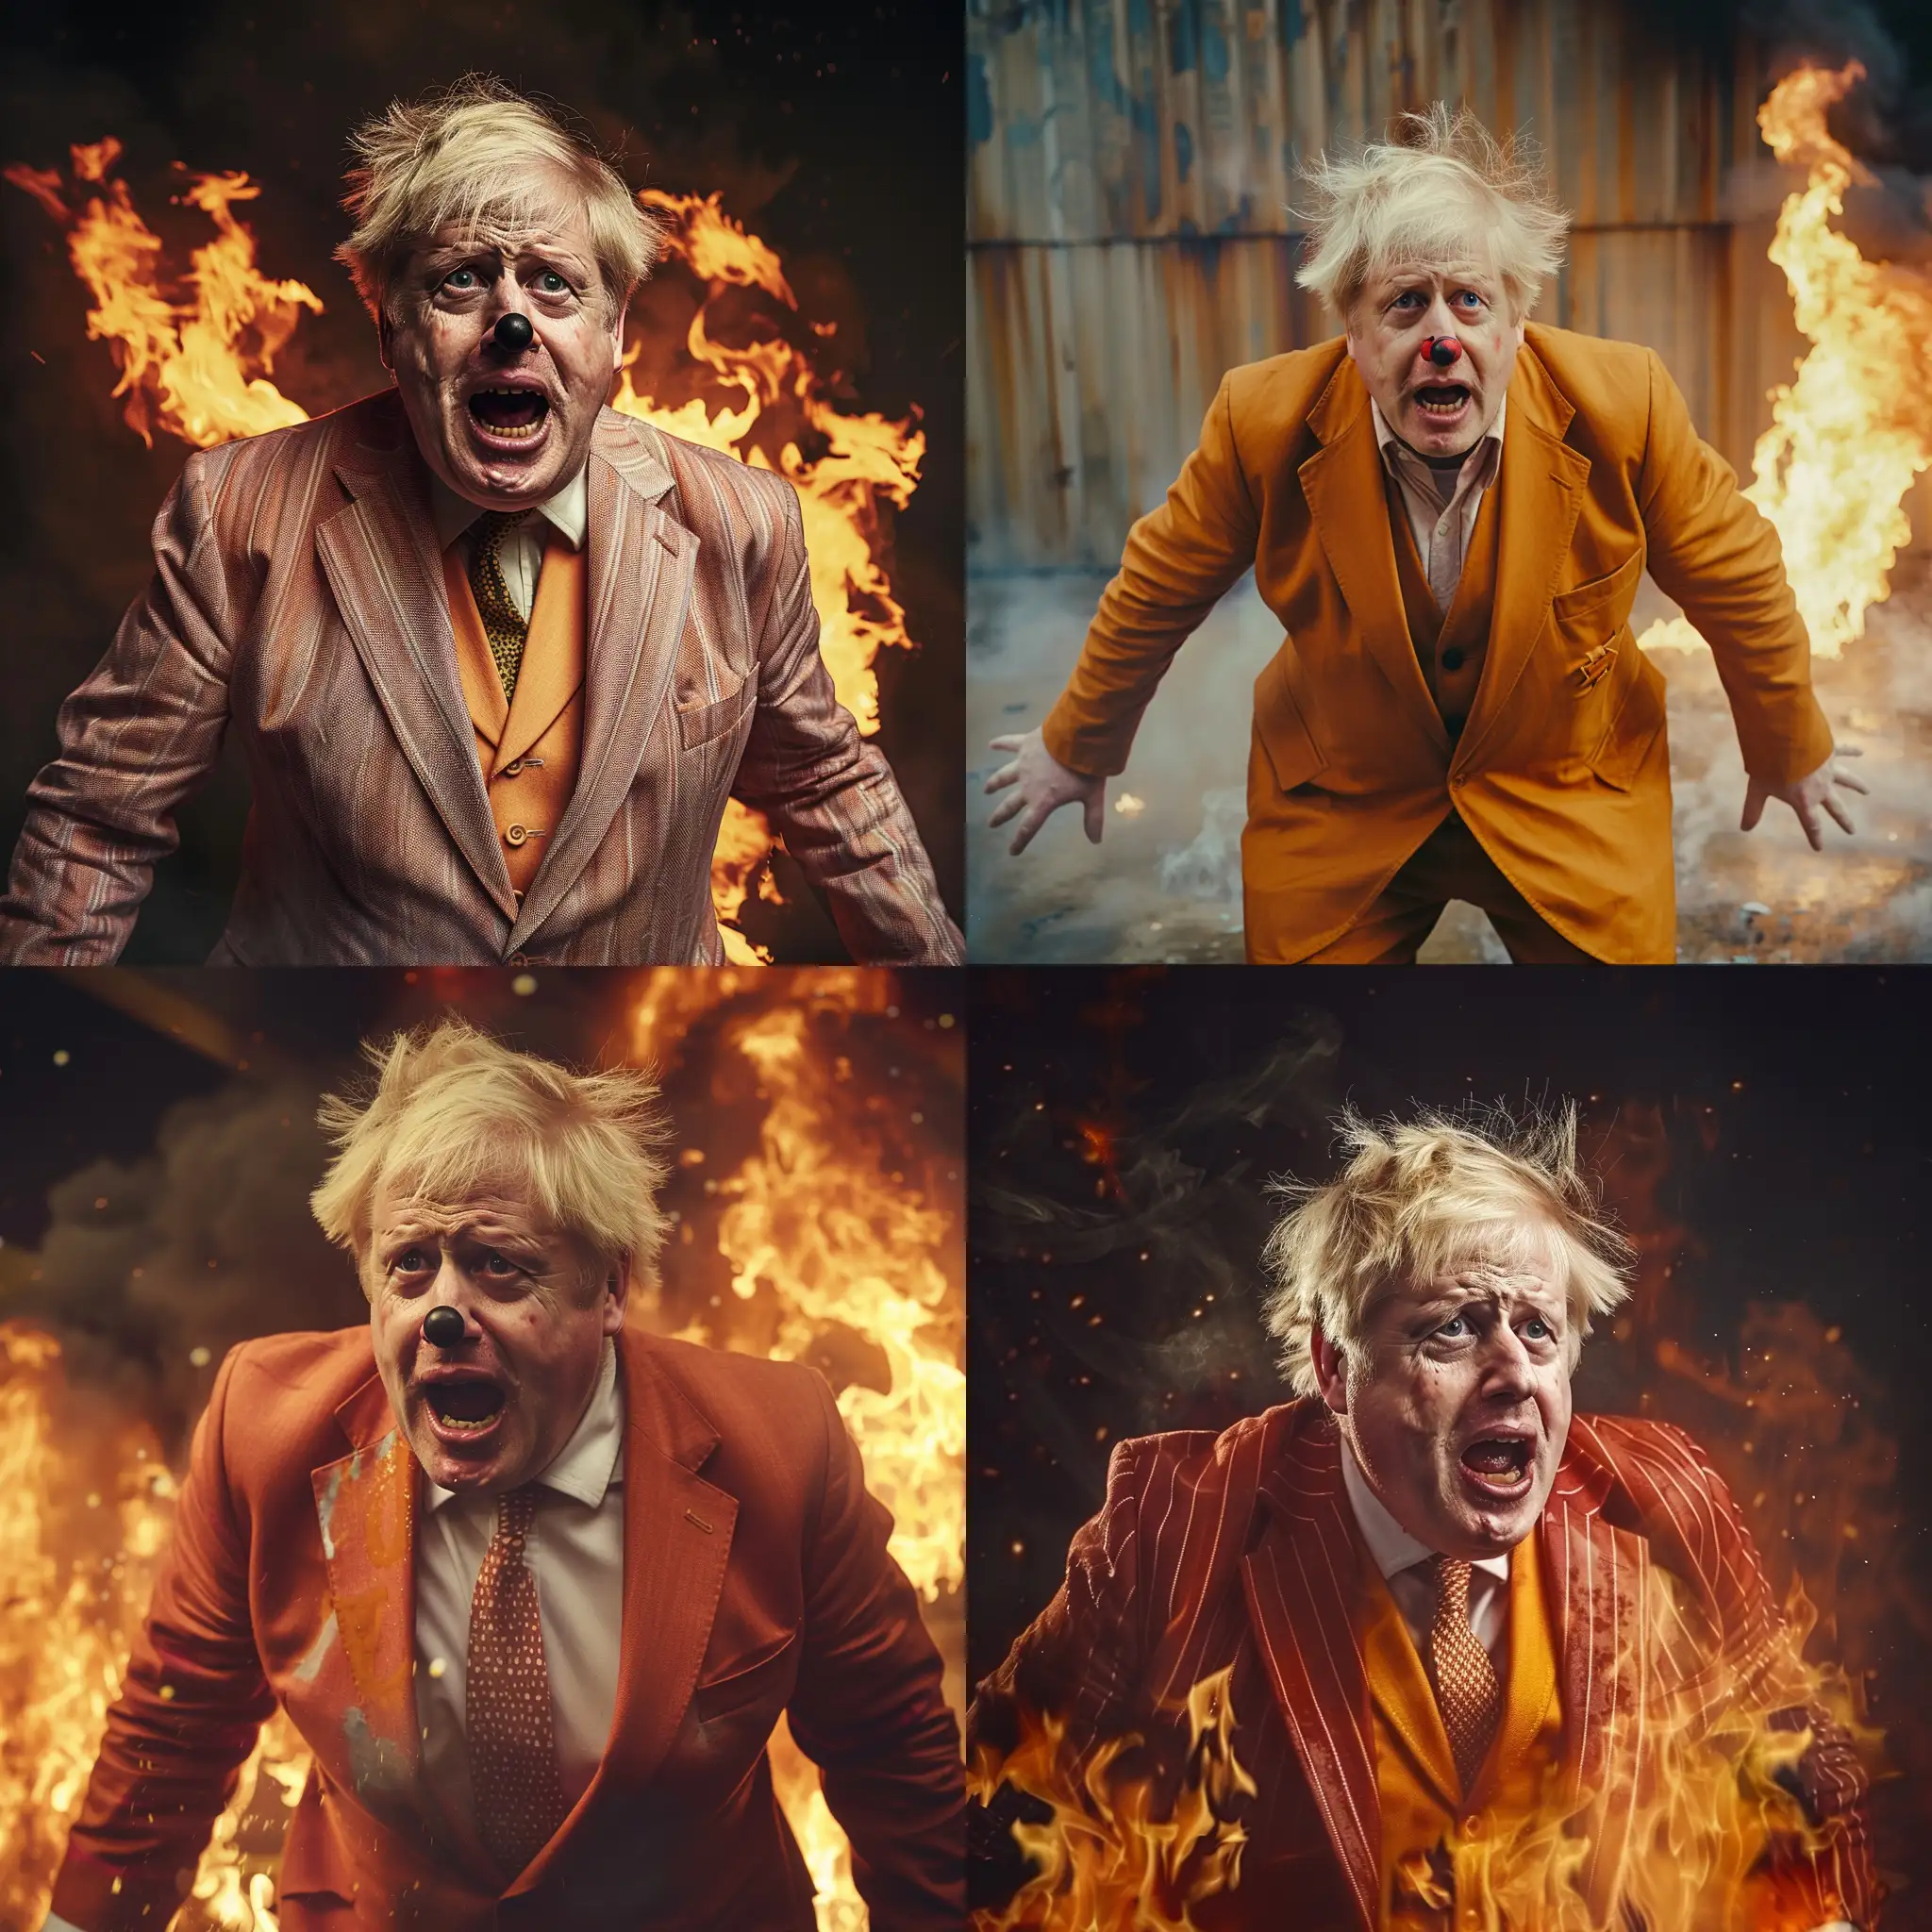 Boris-Johnson-Clown-Suit-Fire-Panic